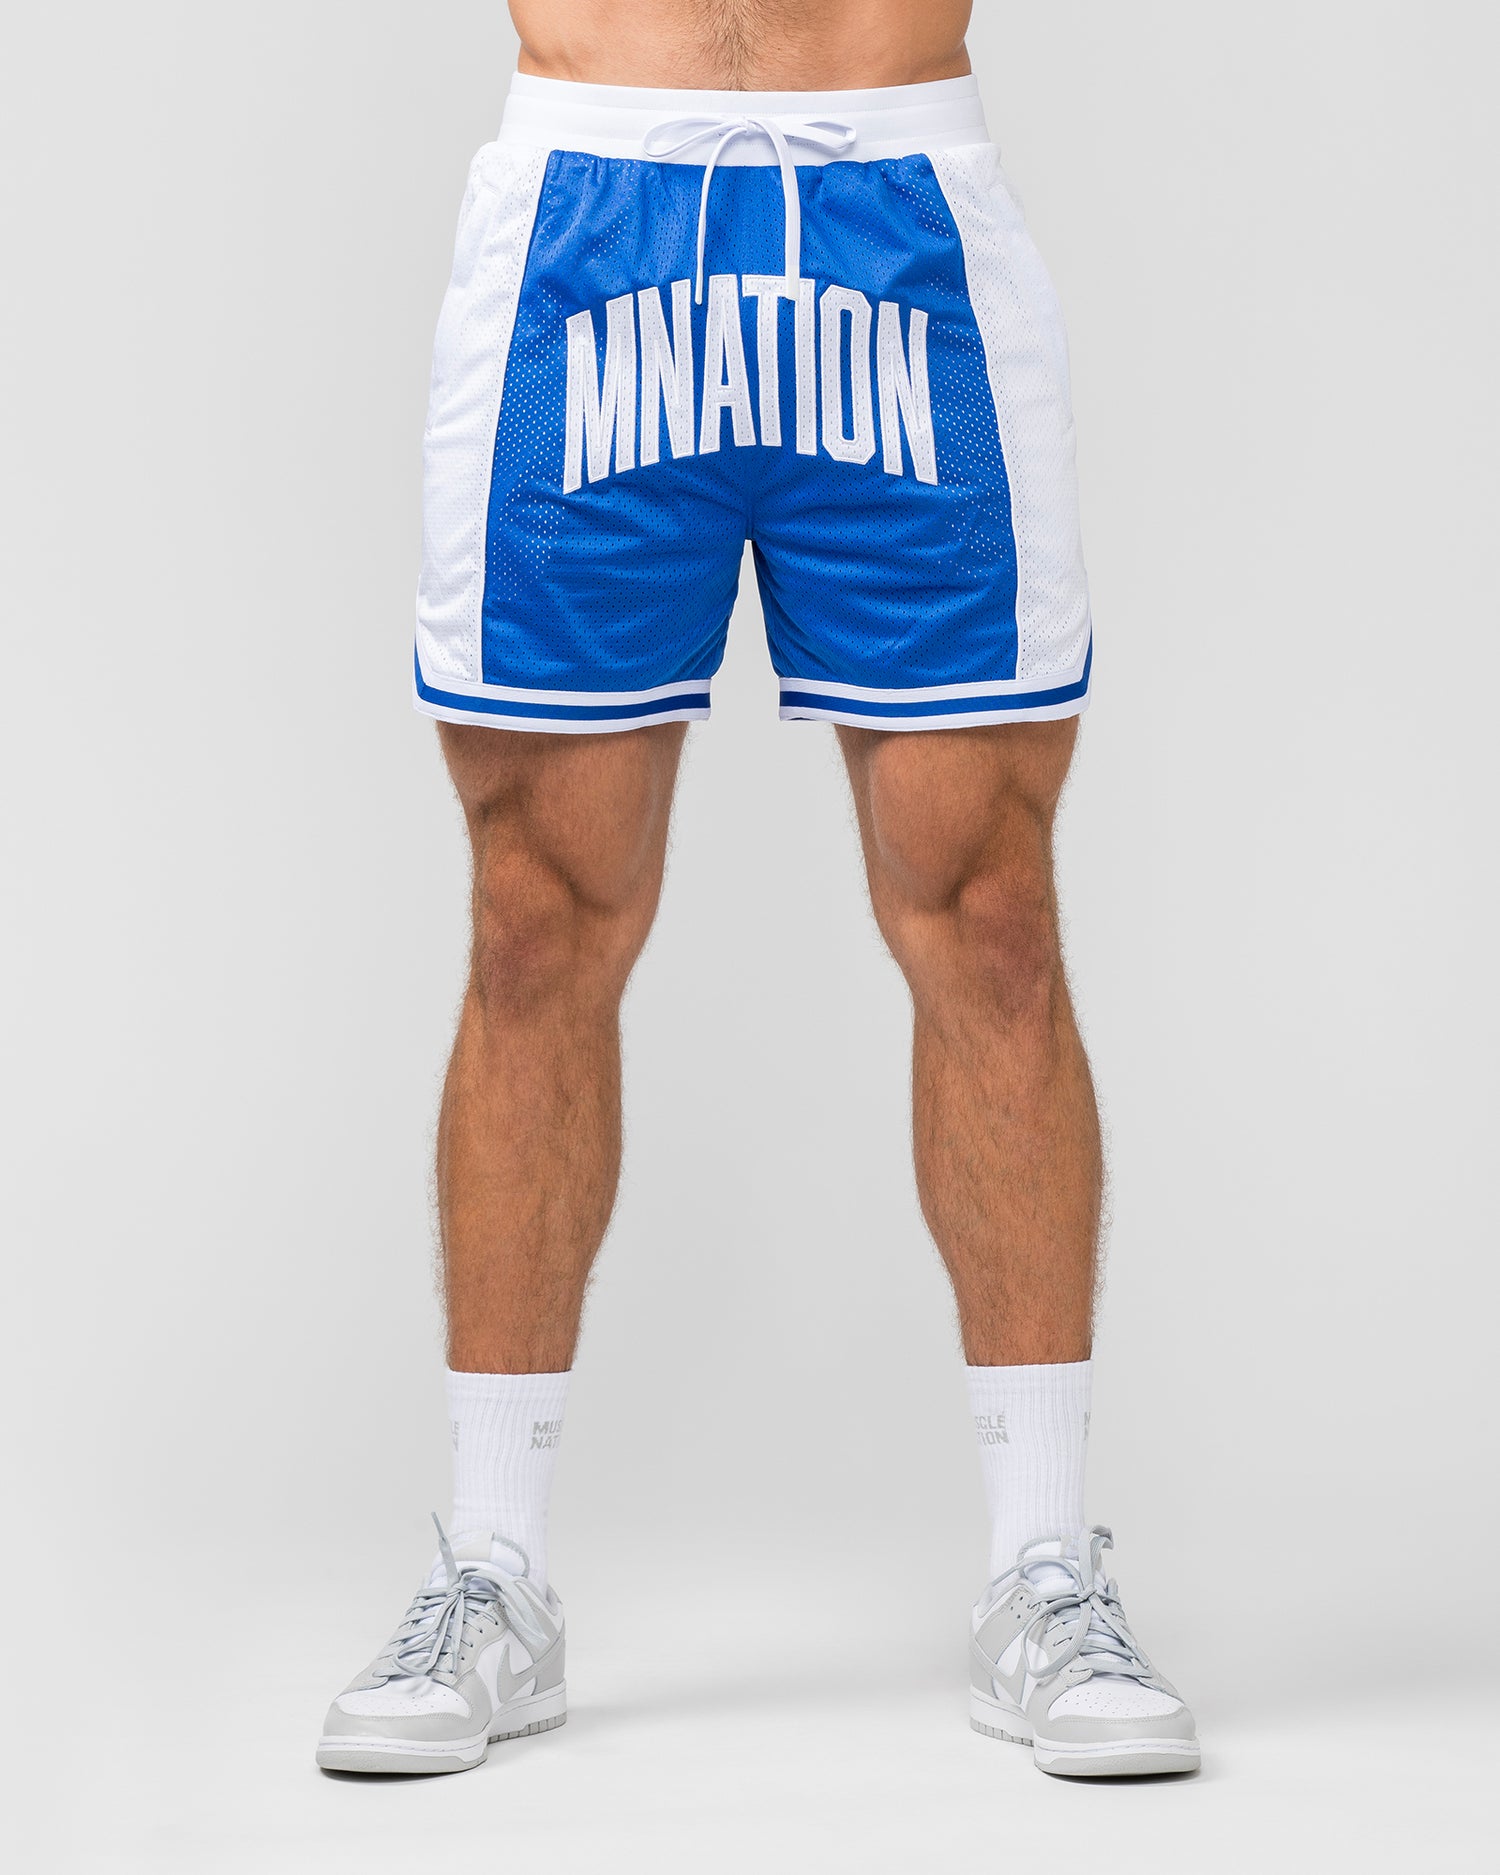 Fadeaway 5'' Basketball Shorts - Bondi Blue / White